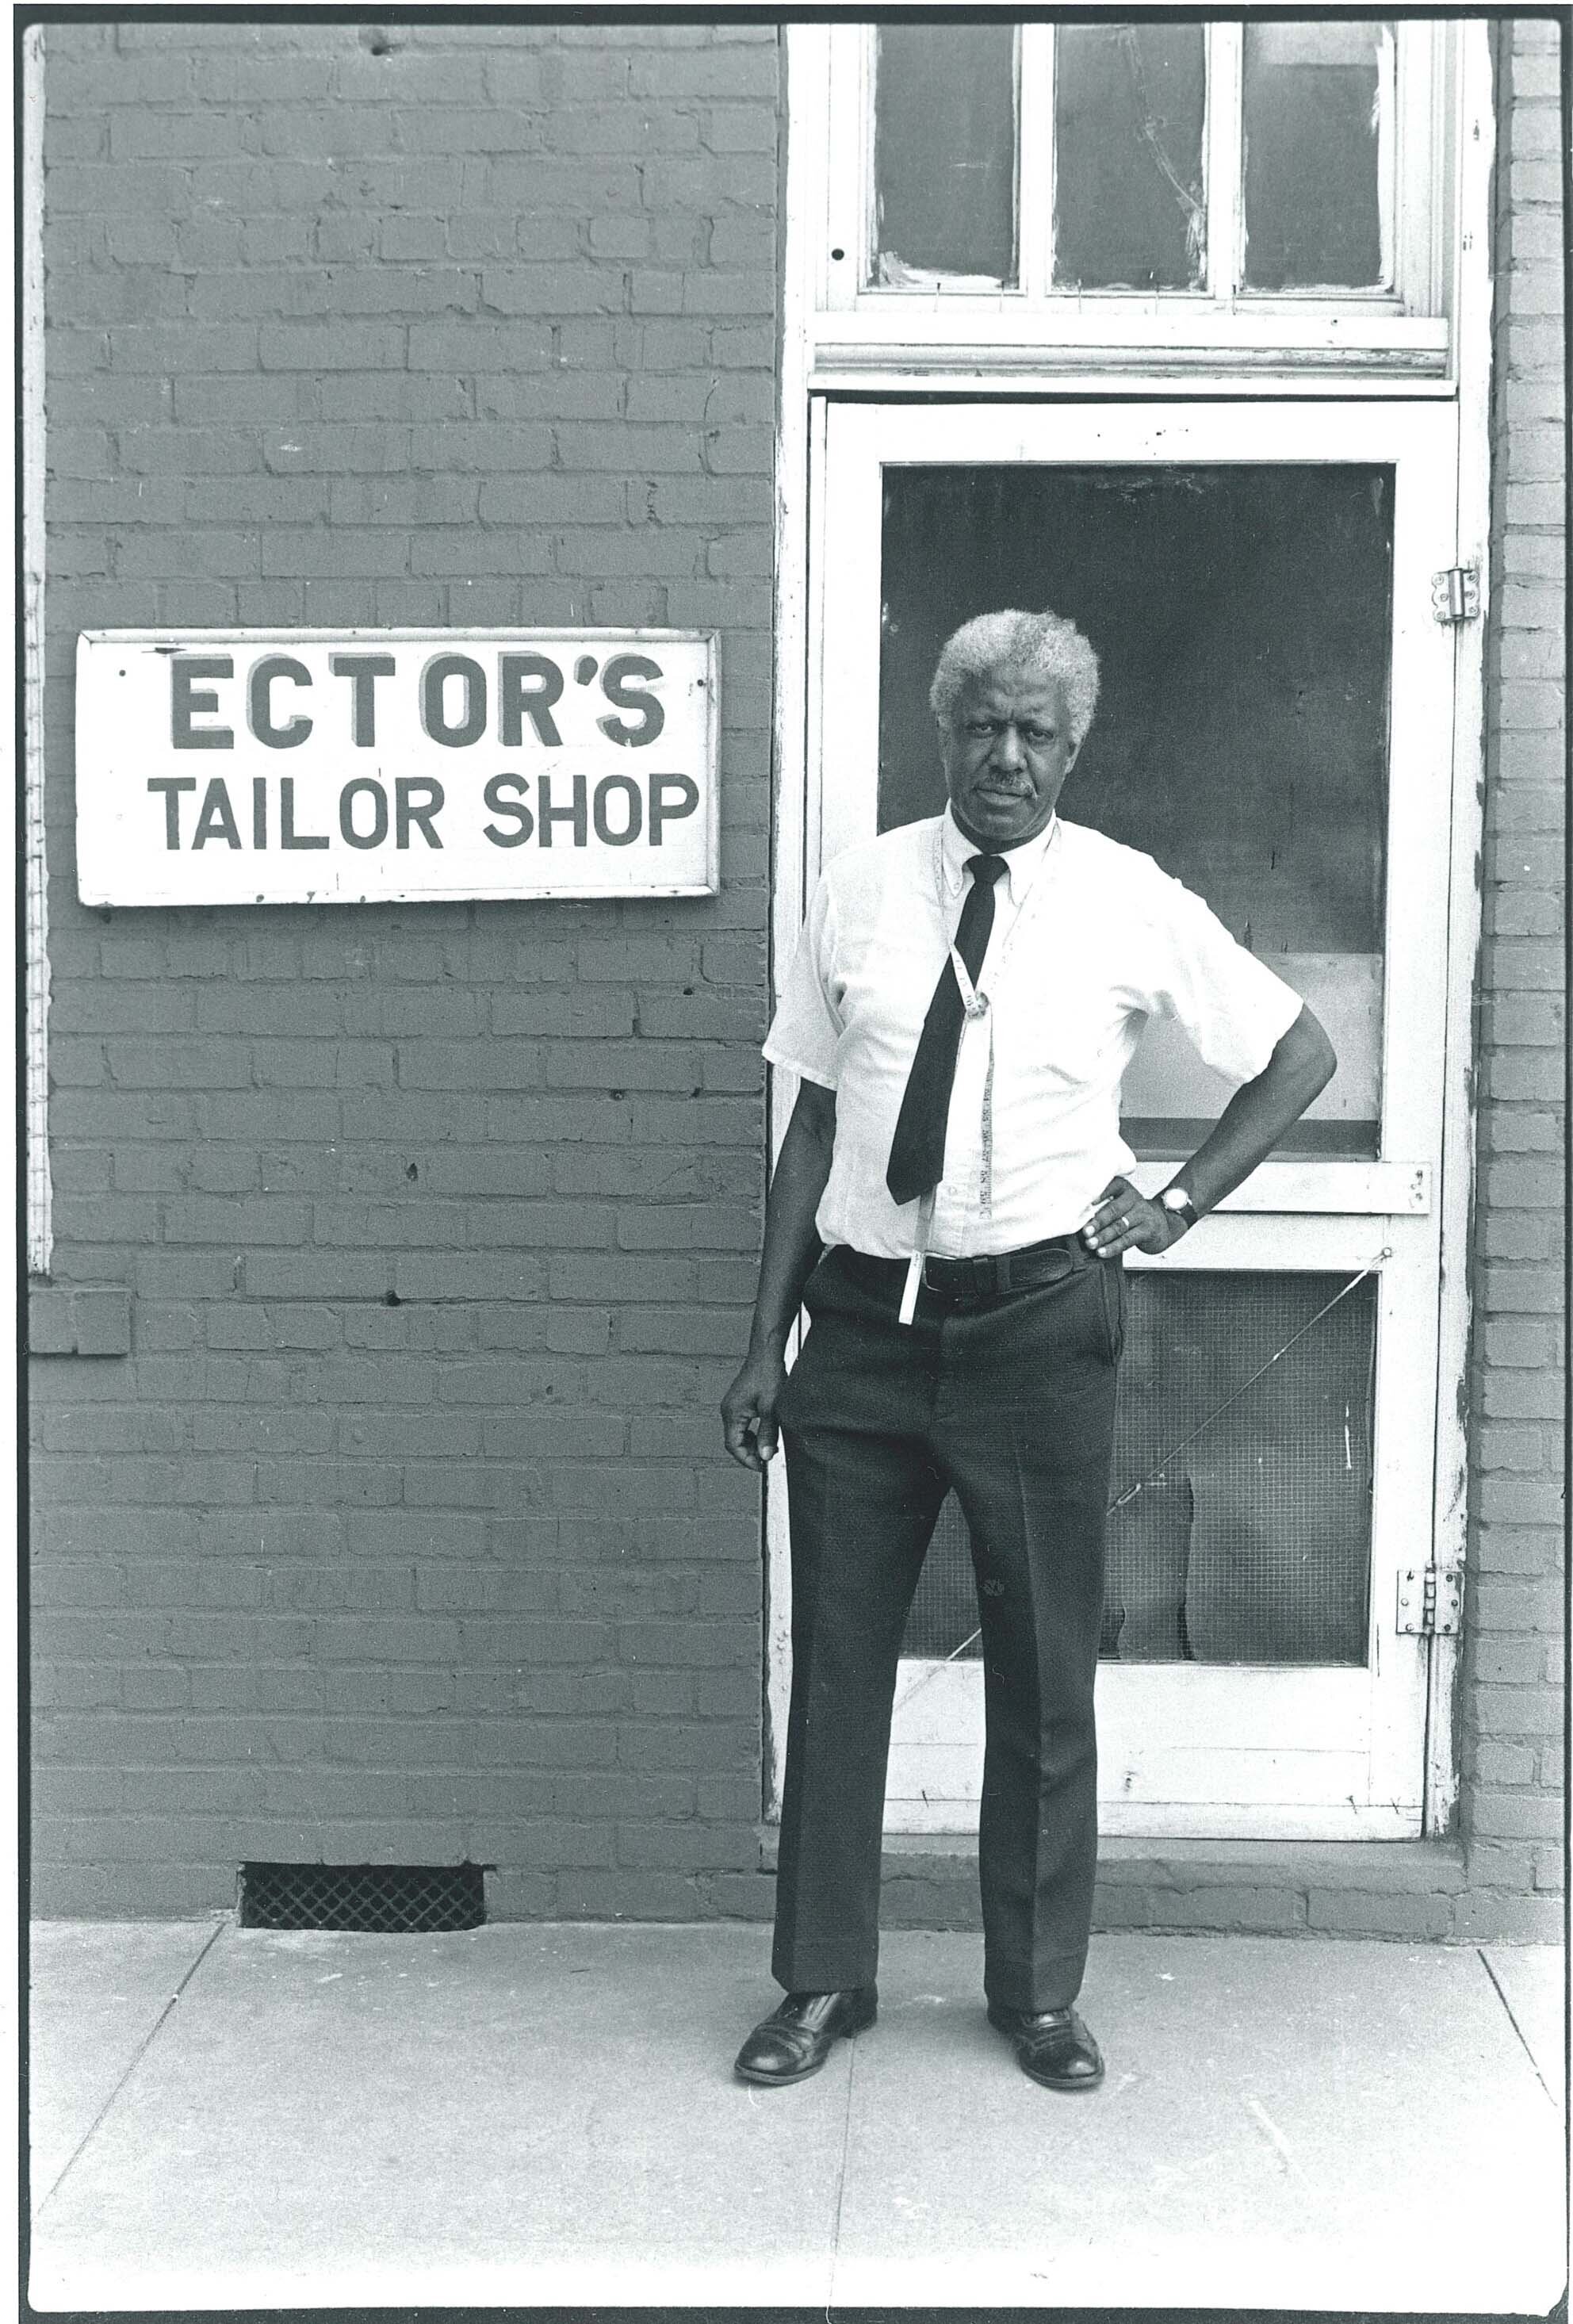   Mr. Jessie Ector's Tailor Shop, 220 Martin Luther King, Jr. Drive, Bainbridge, GA  Image: 1977/printed: 2020 Gelatin silver print 9 3/4 x 6 1/2 in. (image size)  The Do Good Fund, Inc., 2020-070  